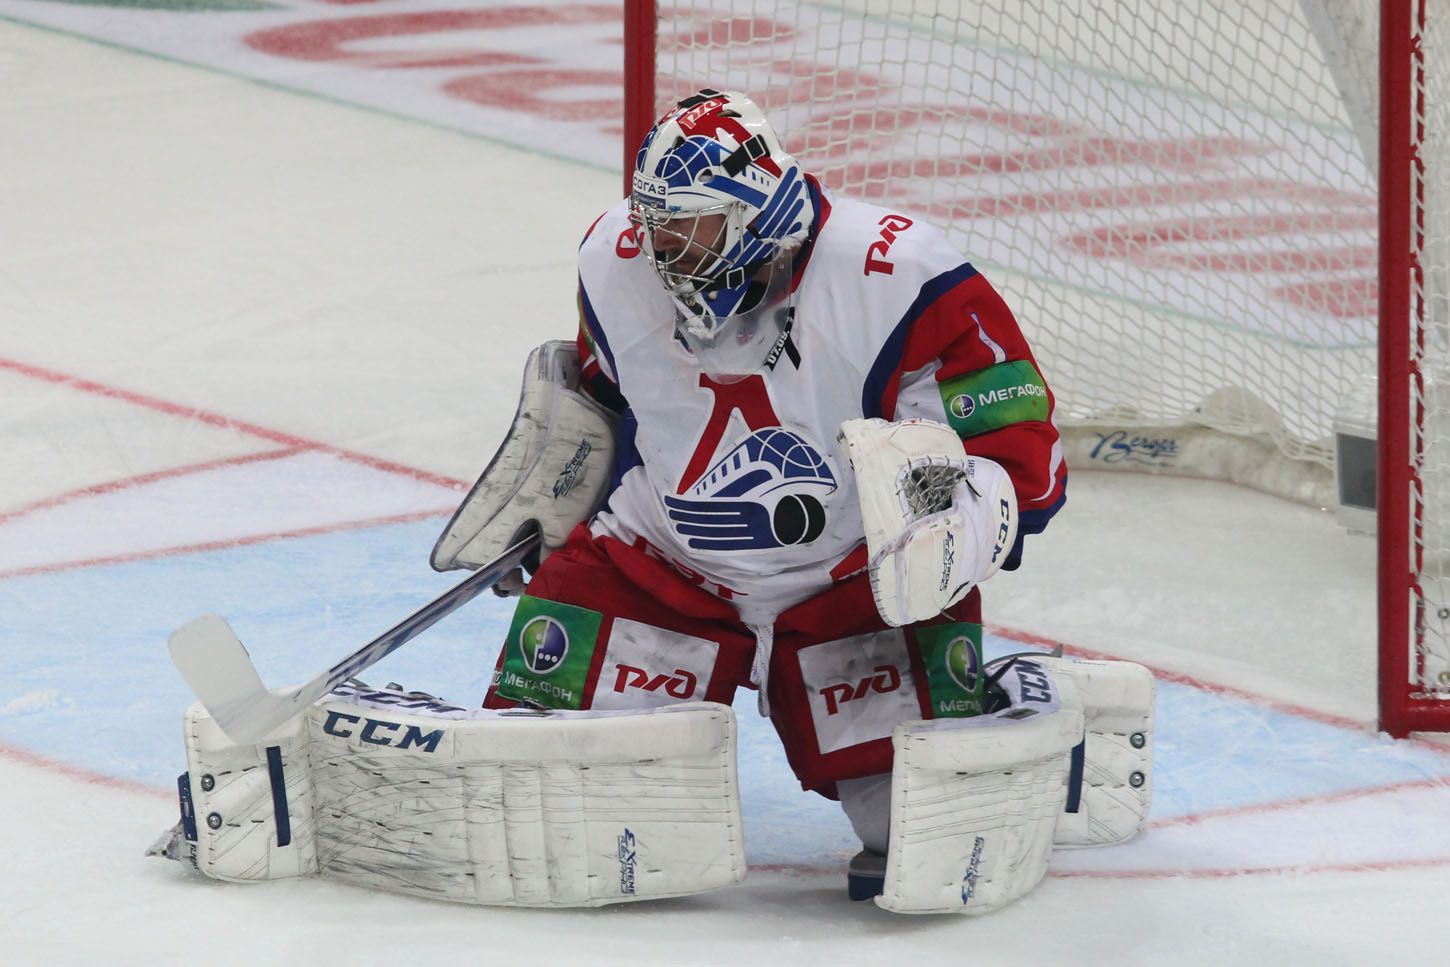 KHL, Lev - Jaroslavl: Curtis Sanford